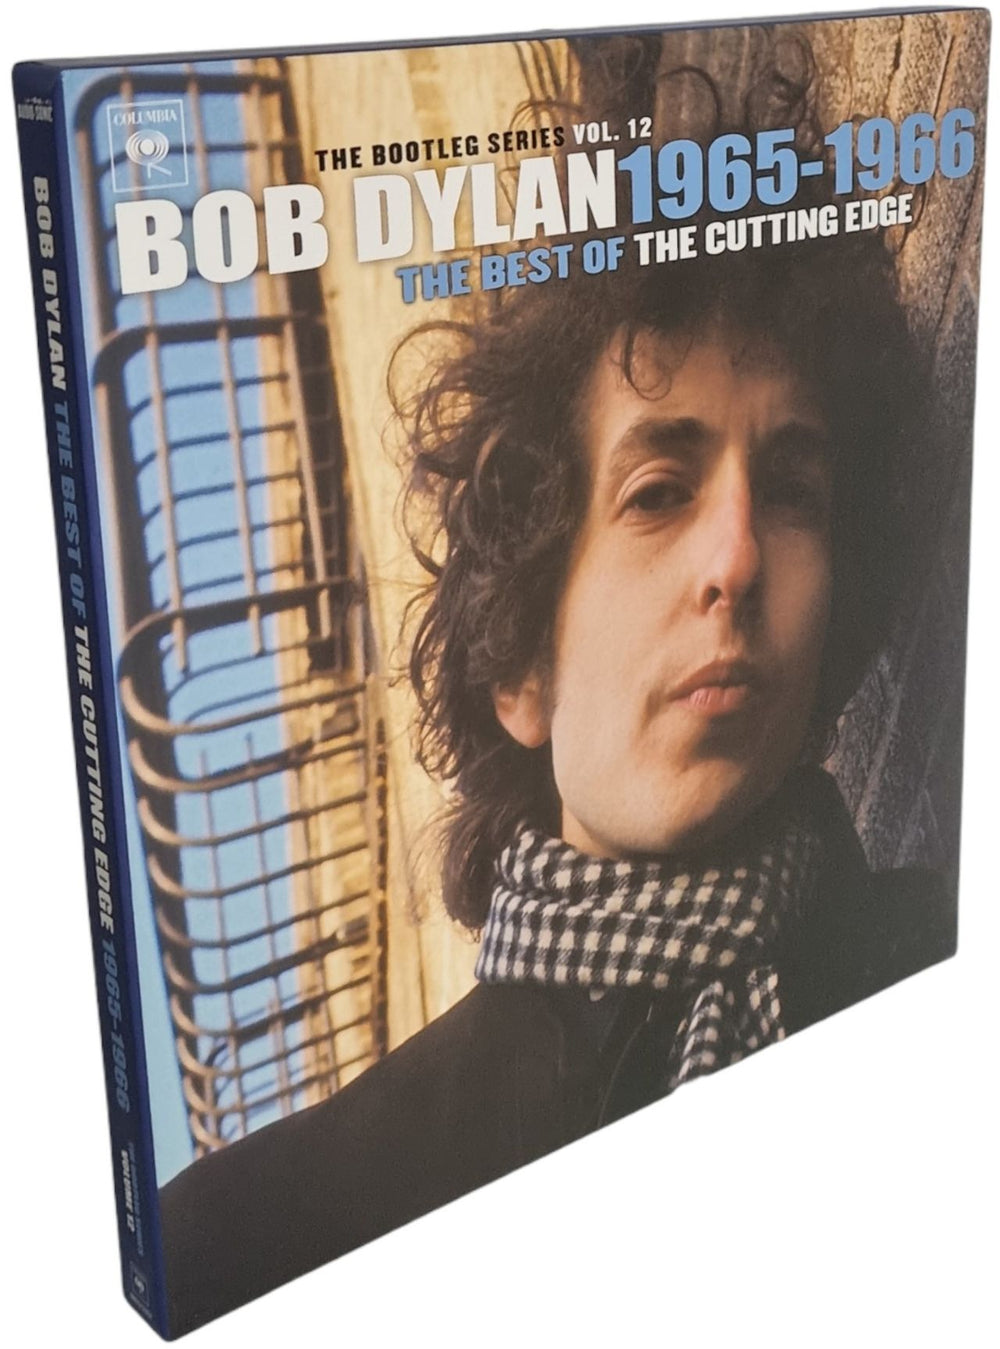 Bob Dylan The Best Of The Cutting Edge 1965-1966 - 180gm + 2-CD set UK Vinyl Box Set 88875124431